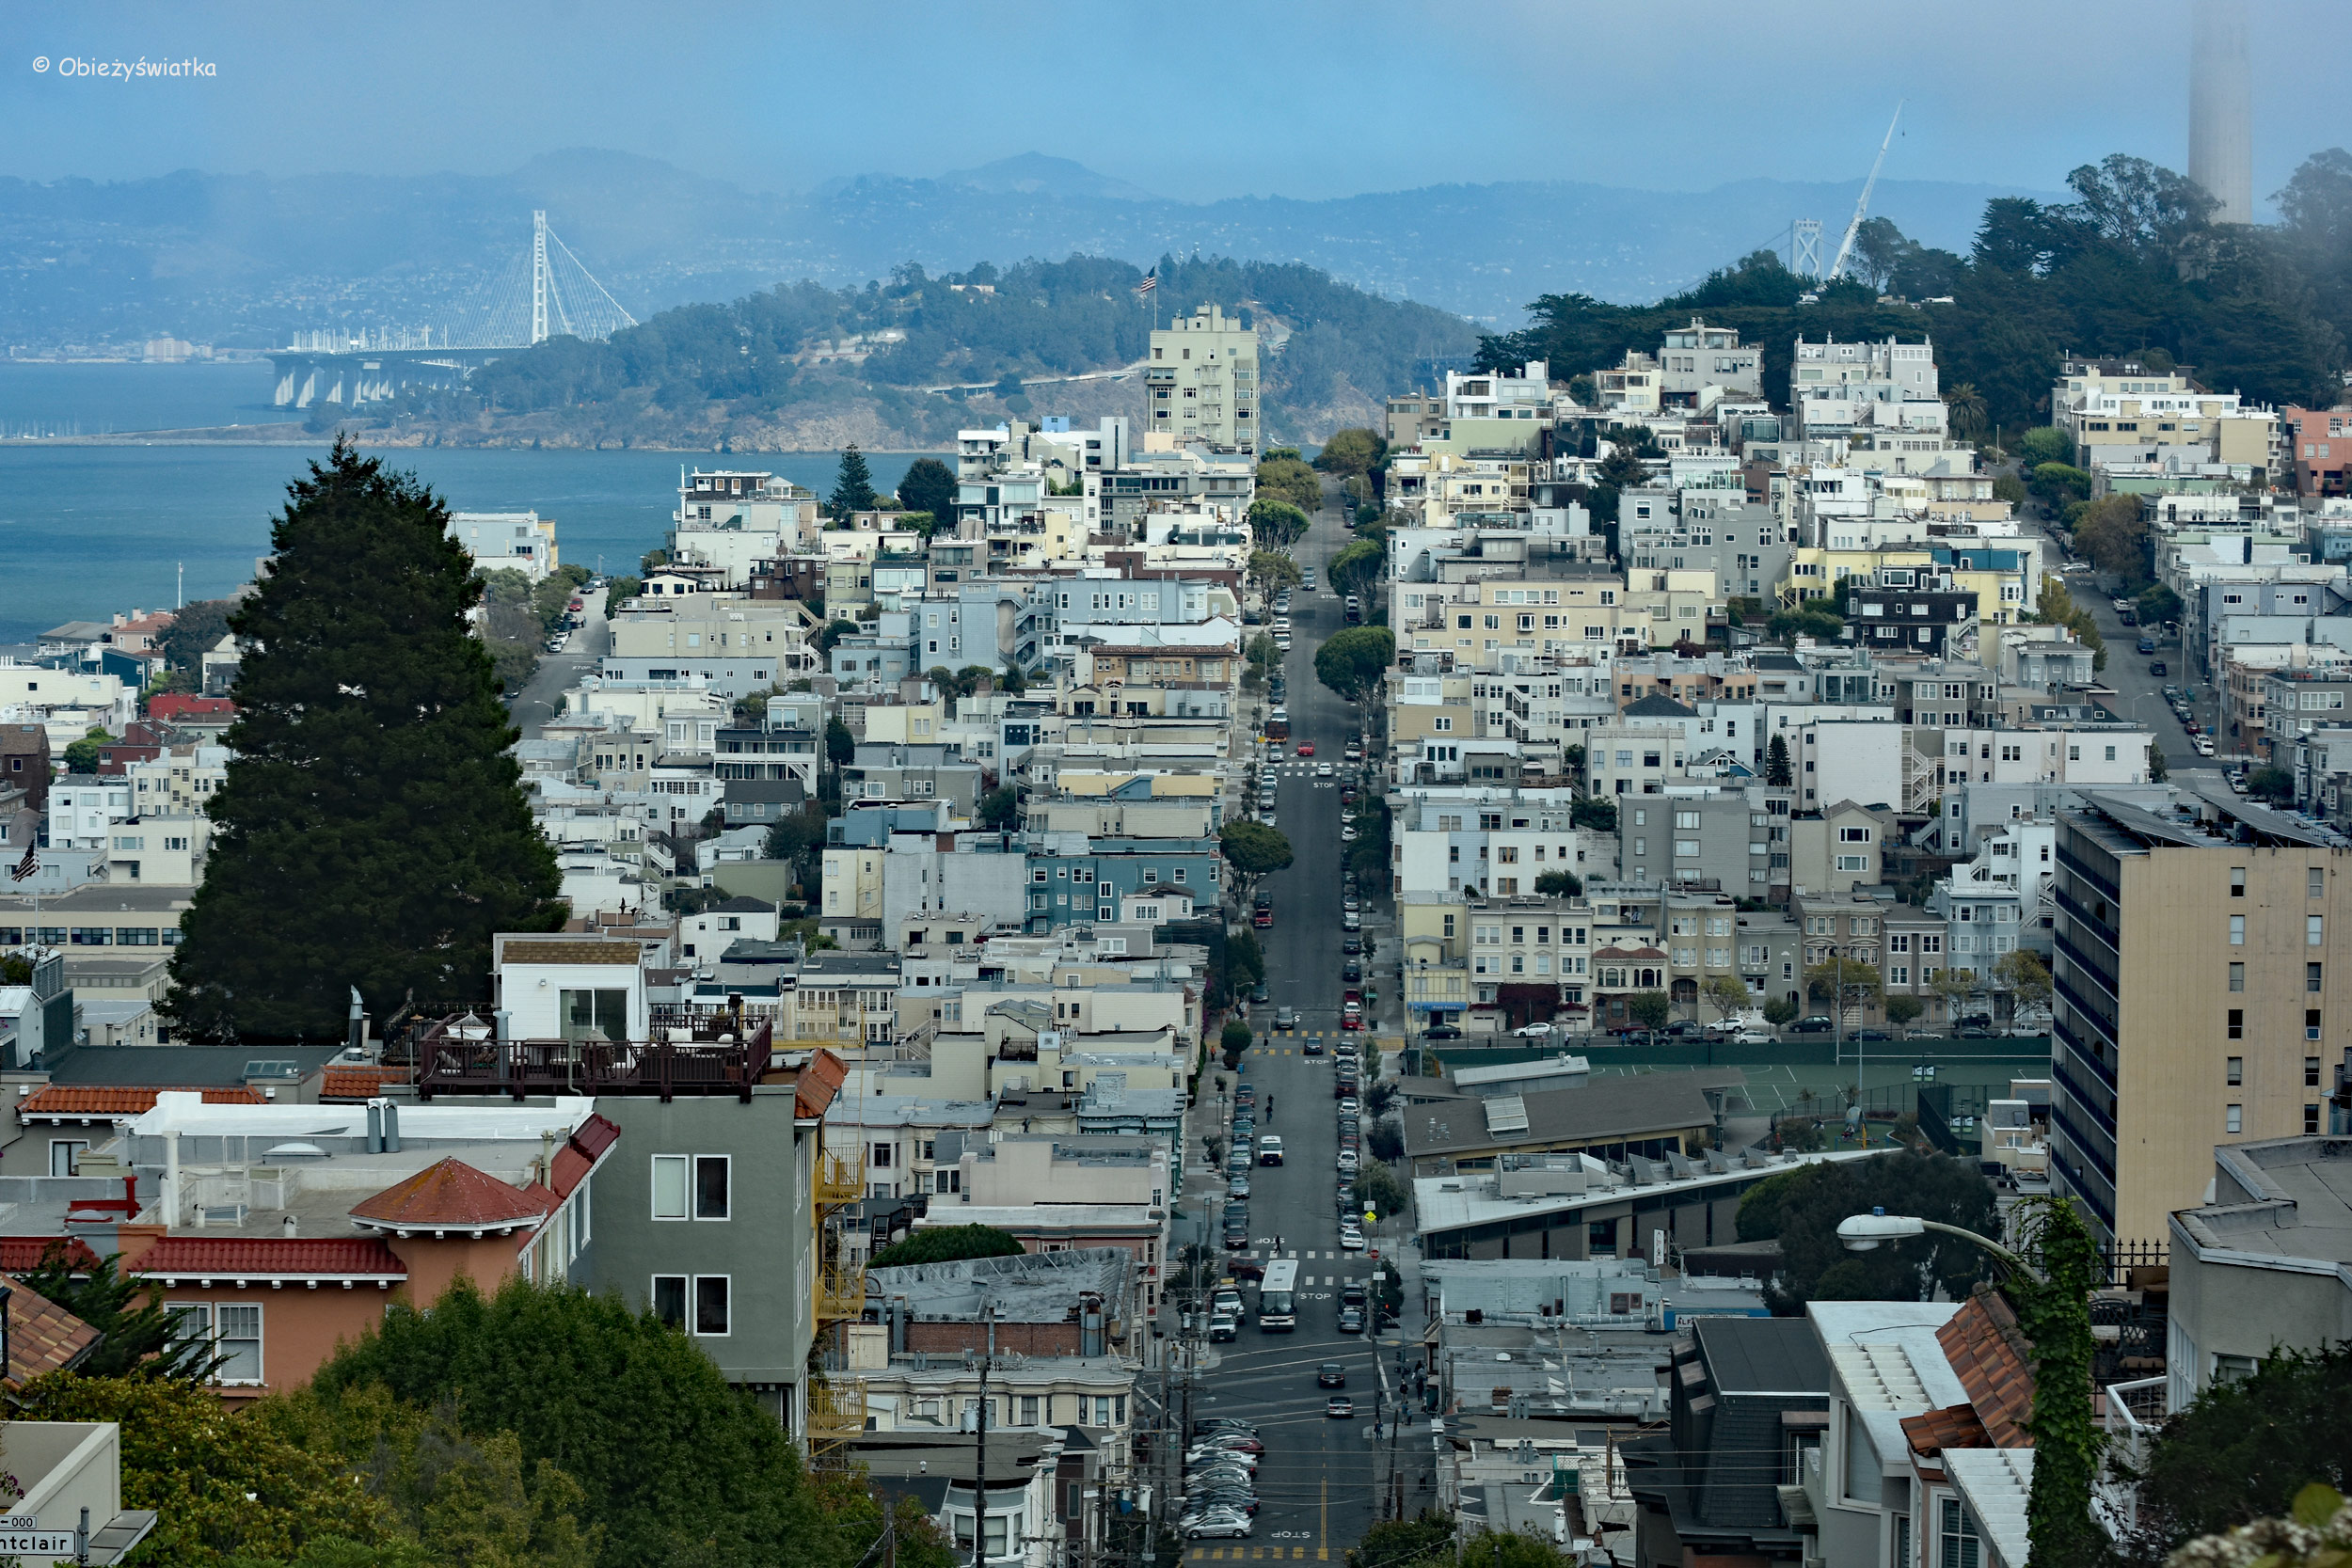 Panorama San Francisco